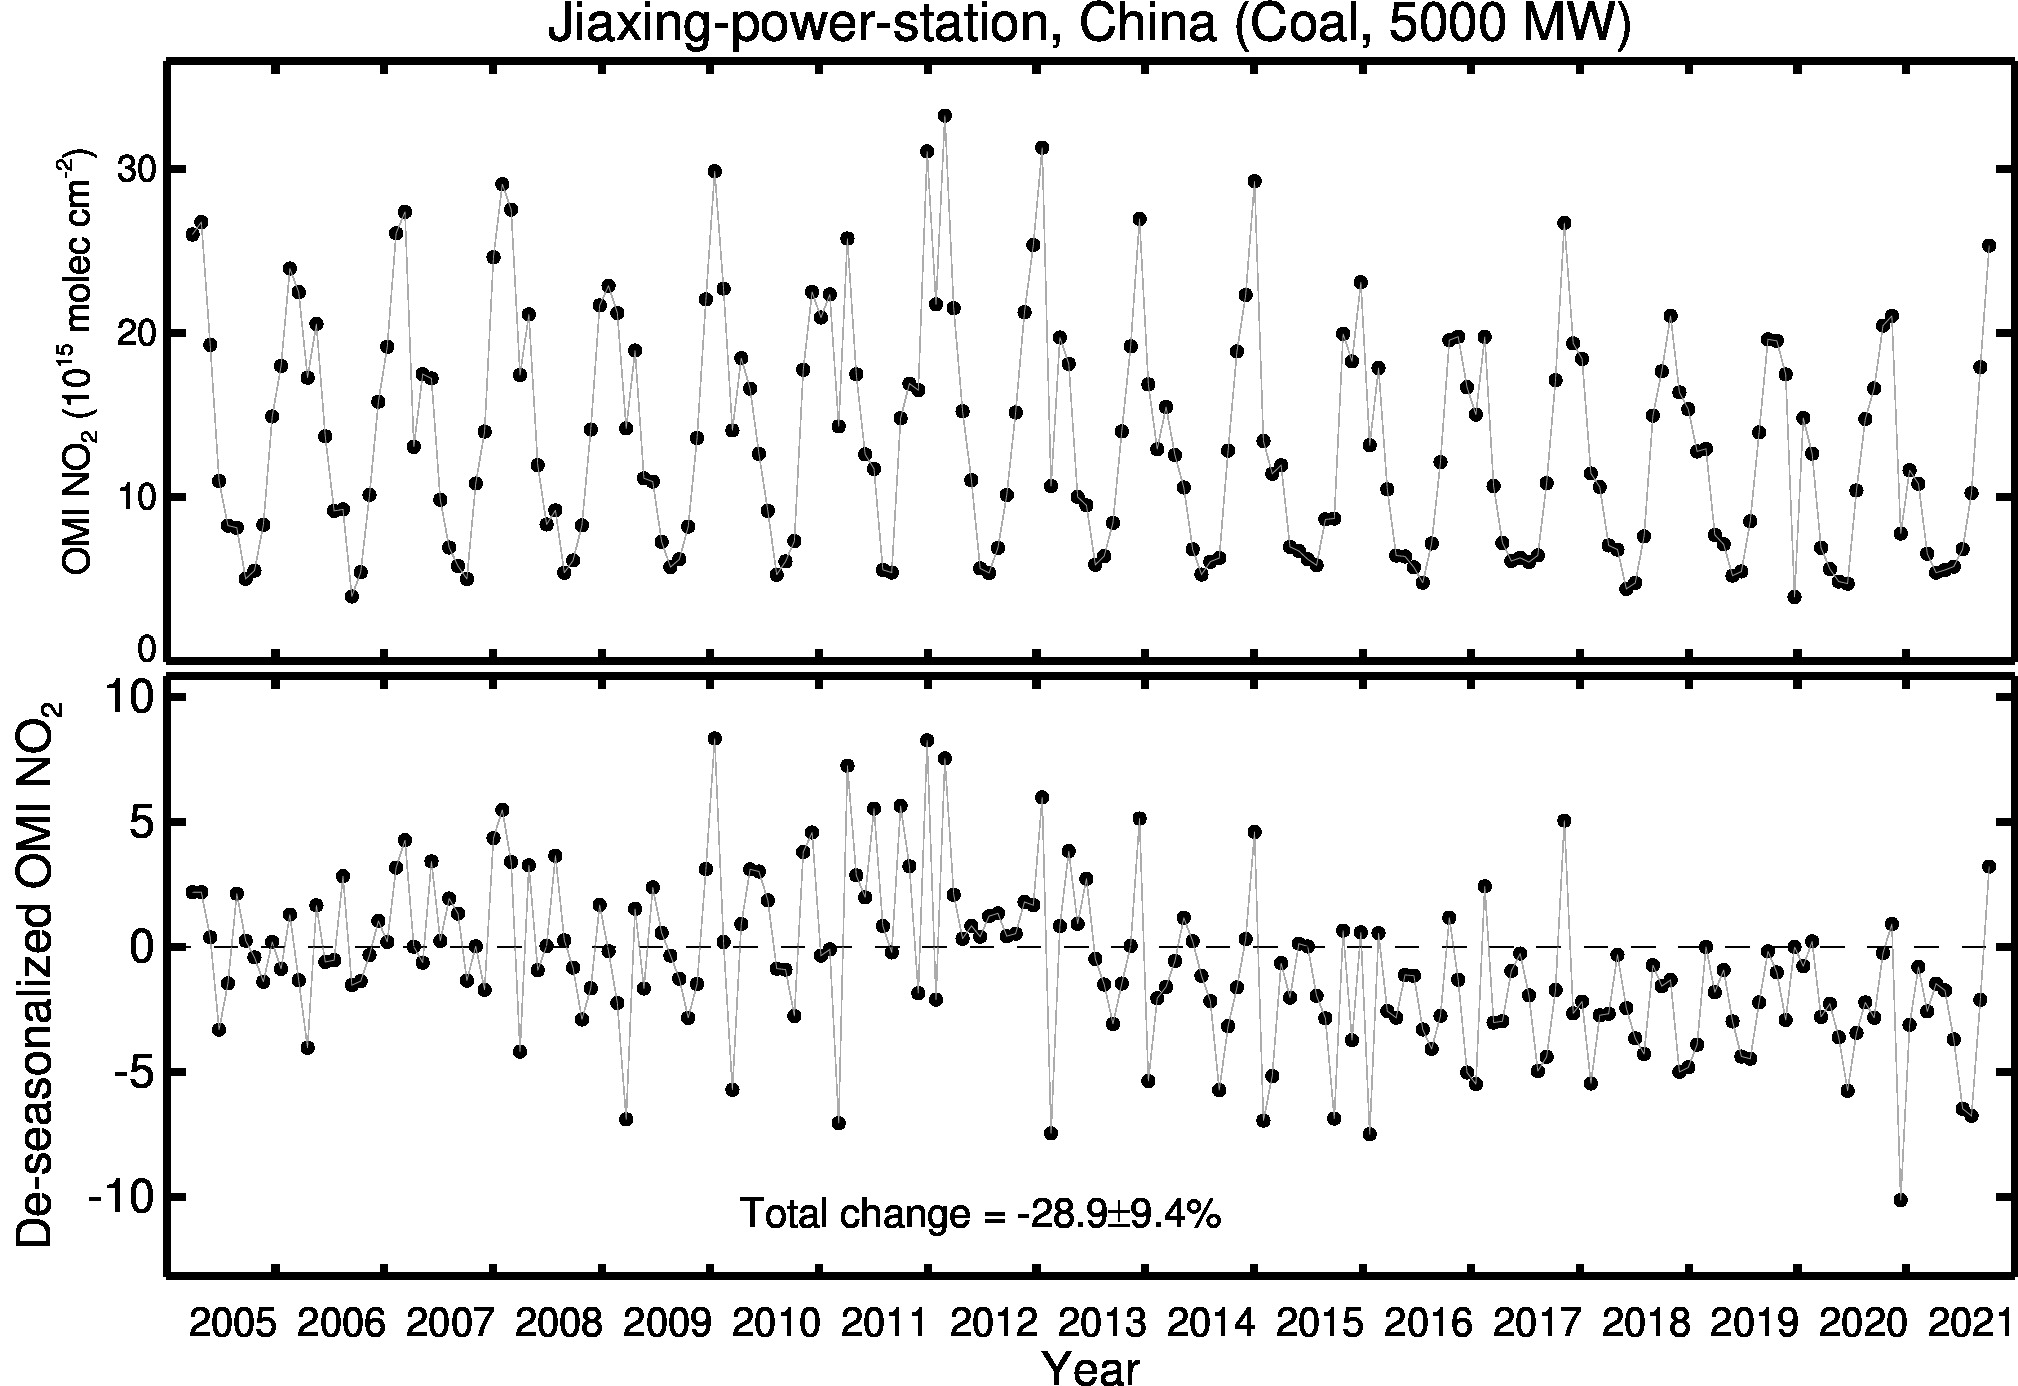 Jiaxing power station Line Plot 2005-2021